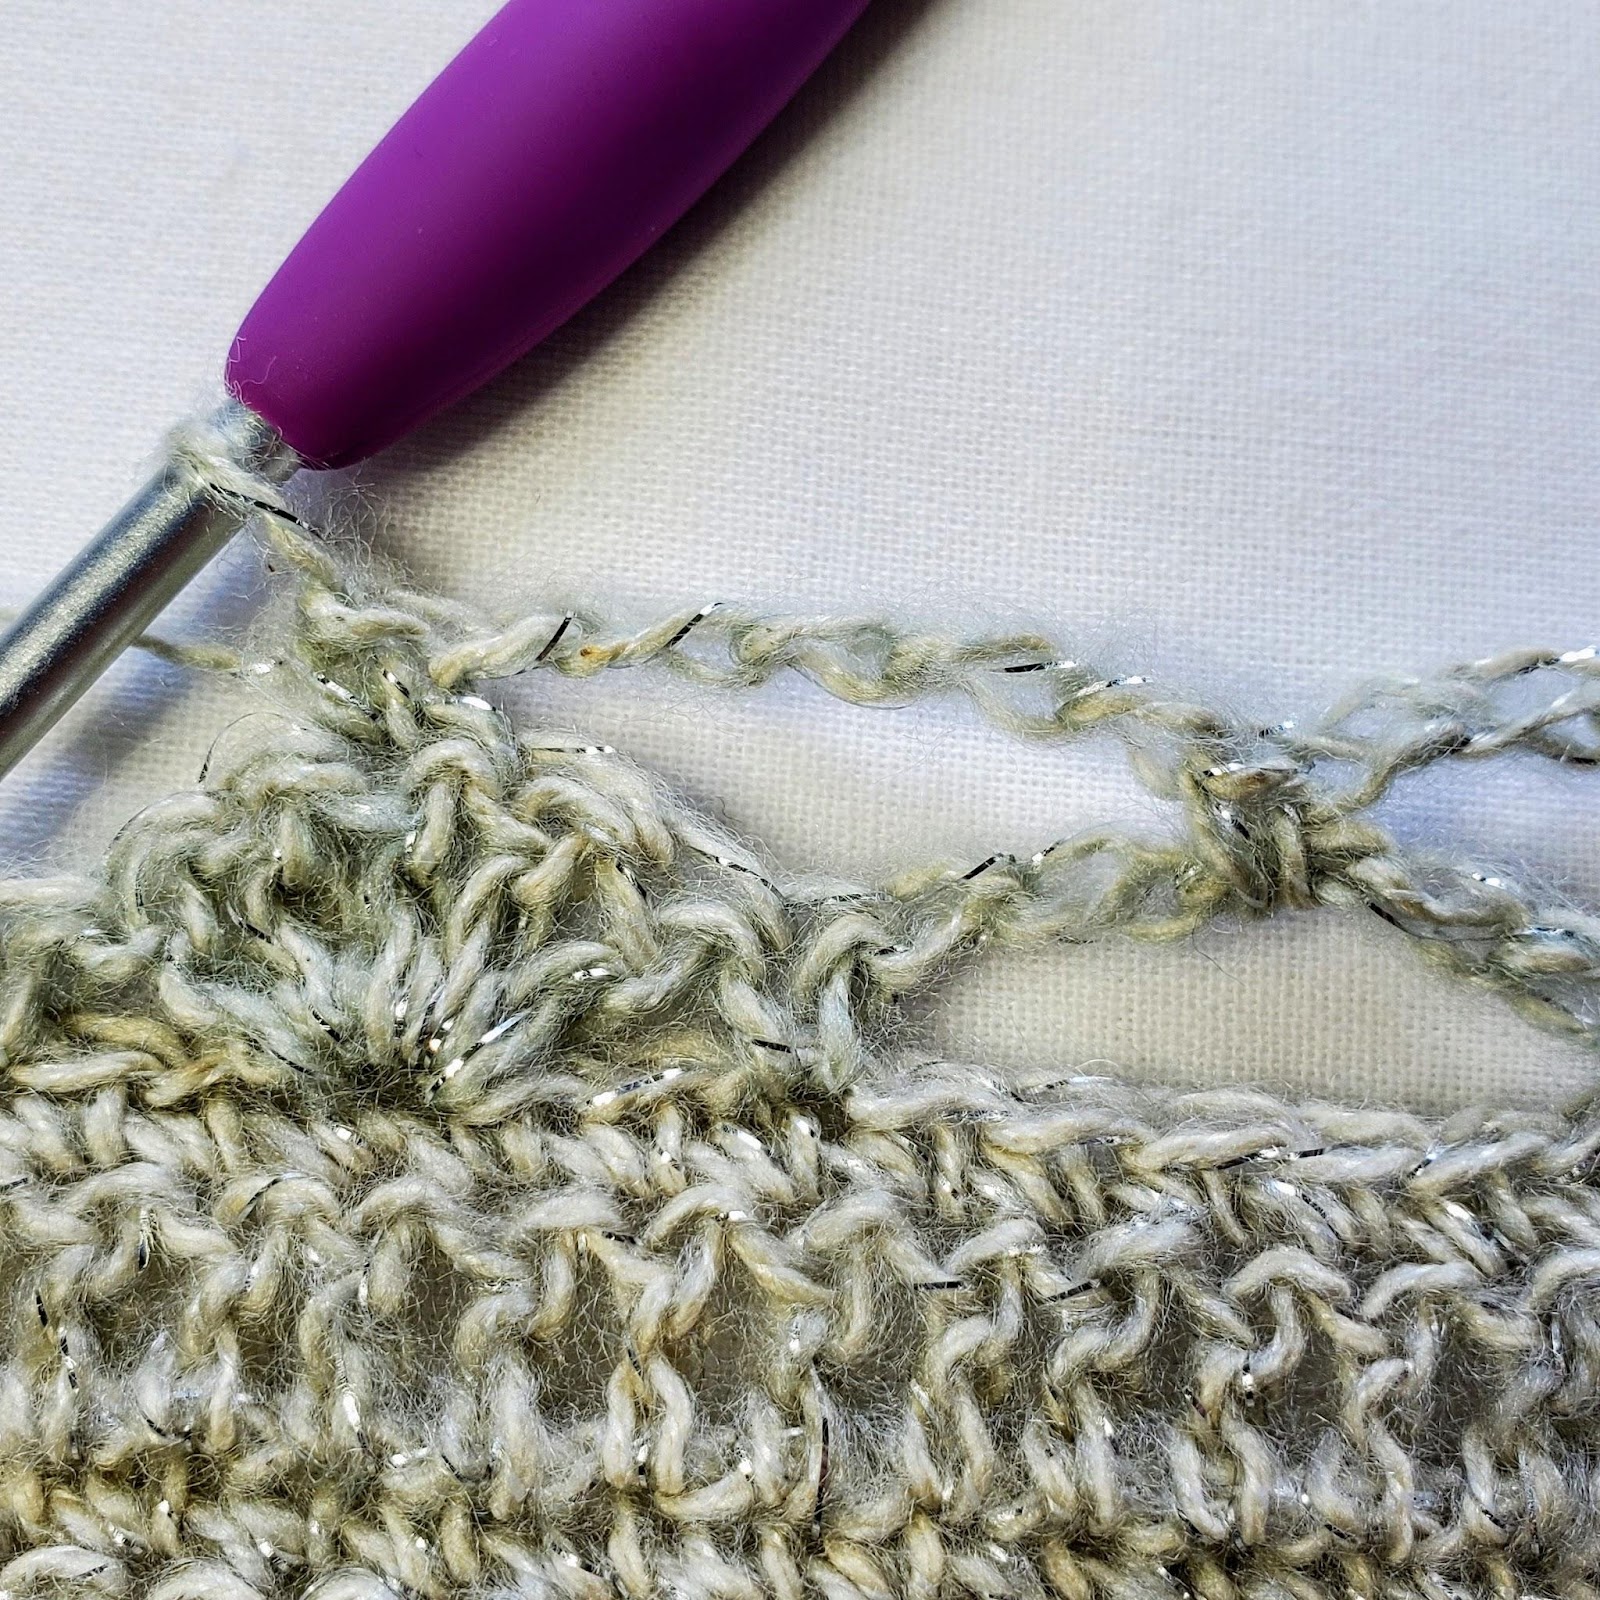 Shells And Trellis Tunic - Free Crochet Top Pattern